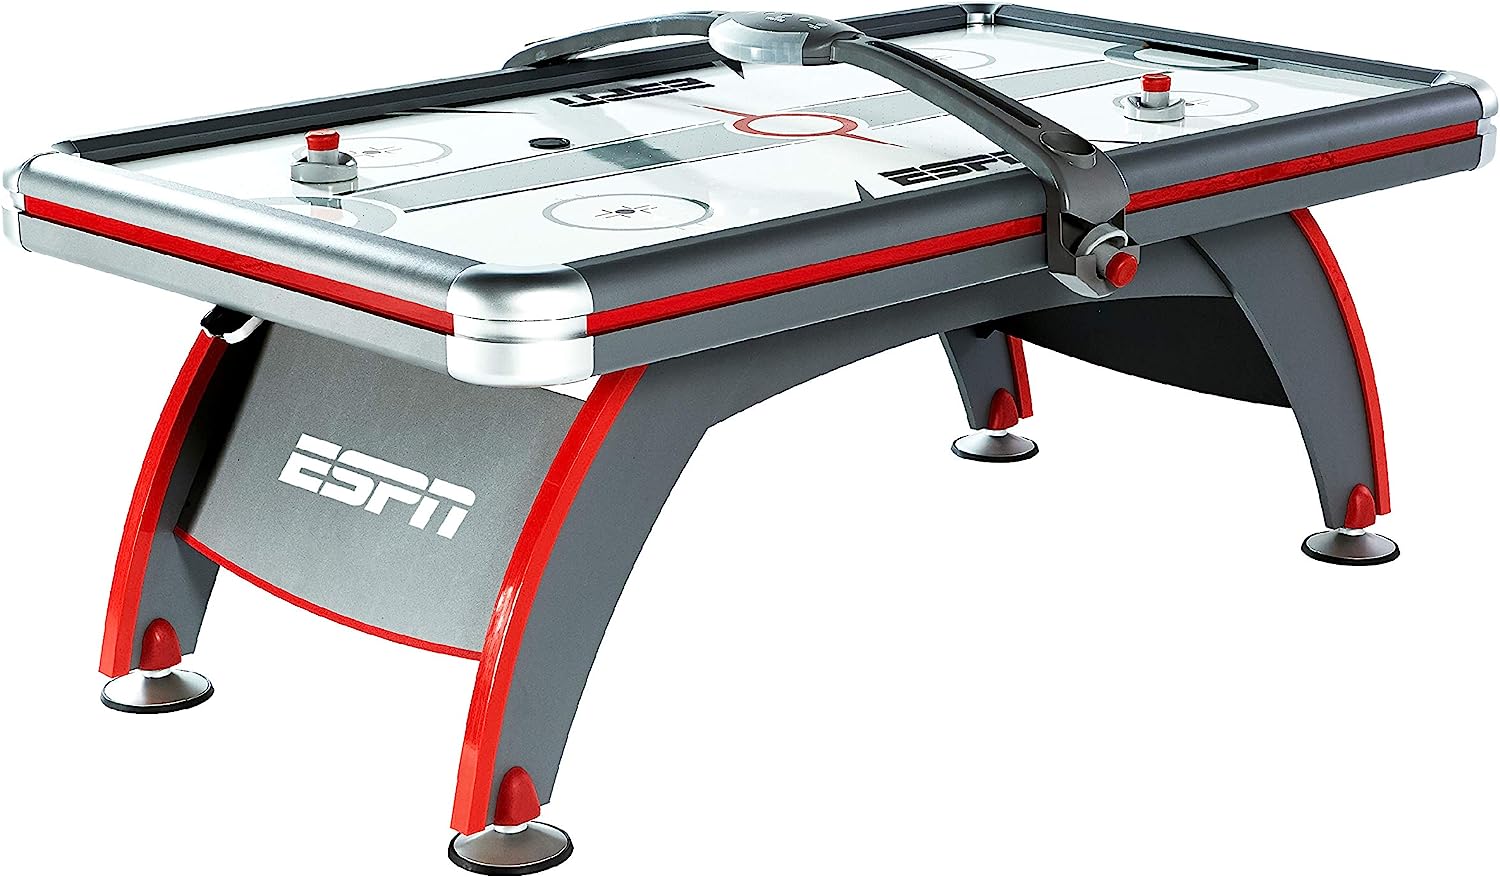 ESPN Air Powered Hockey Tables with Arcade Score [...]